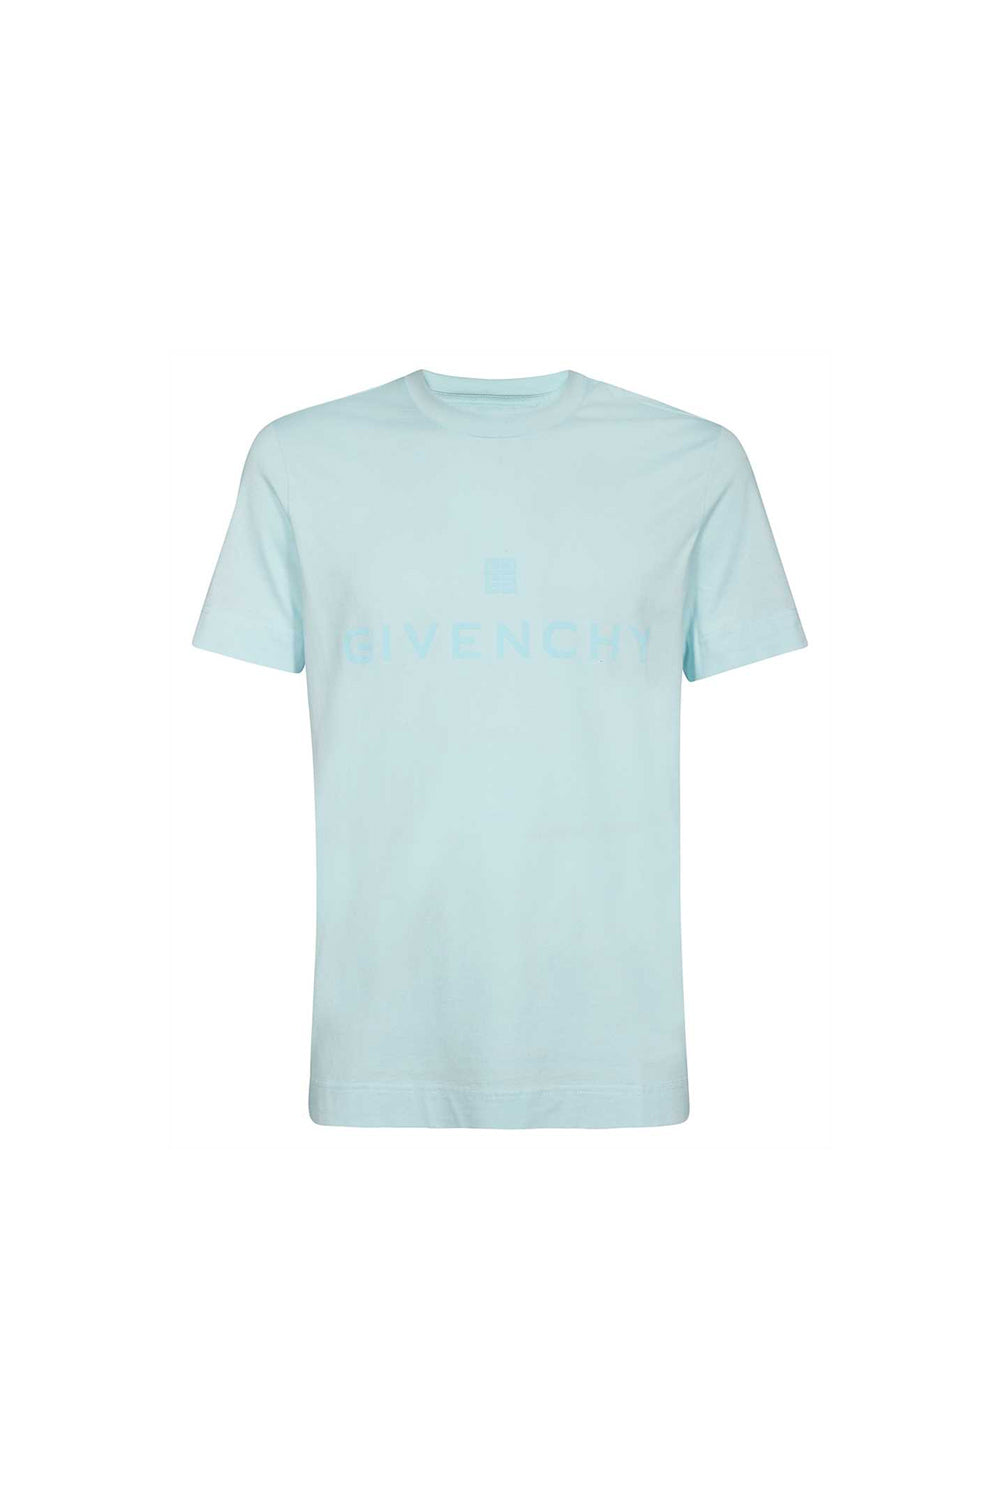 Givenchy logo-print blue T-shirt